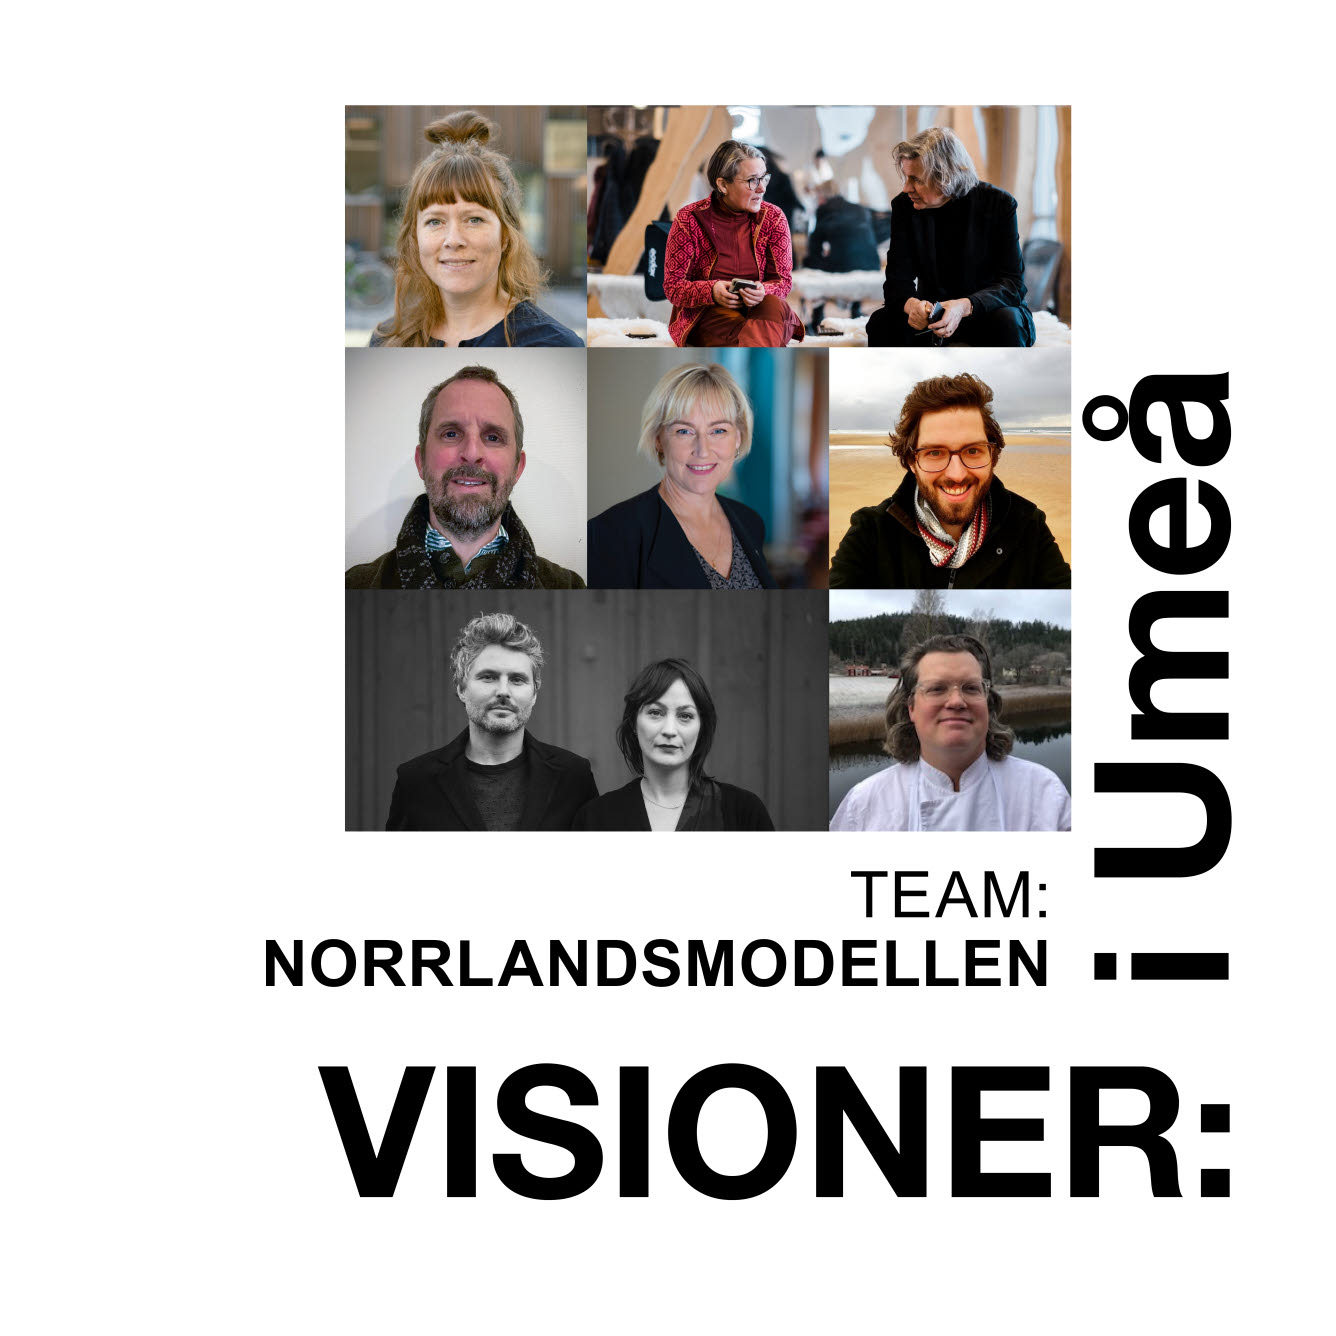 Team Norrlandsmodellen bestående av nio personer.